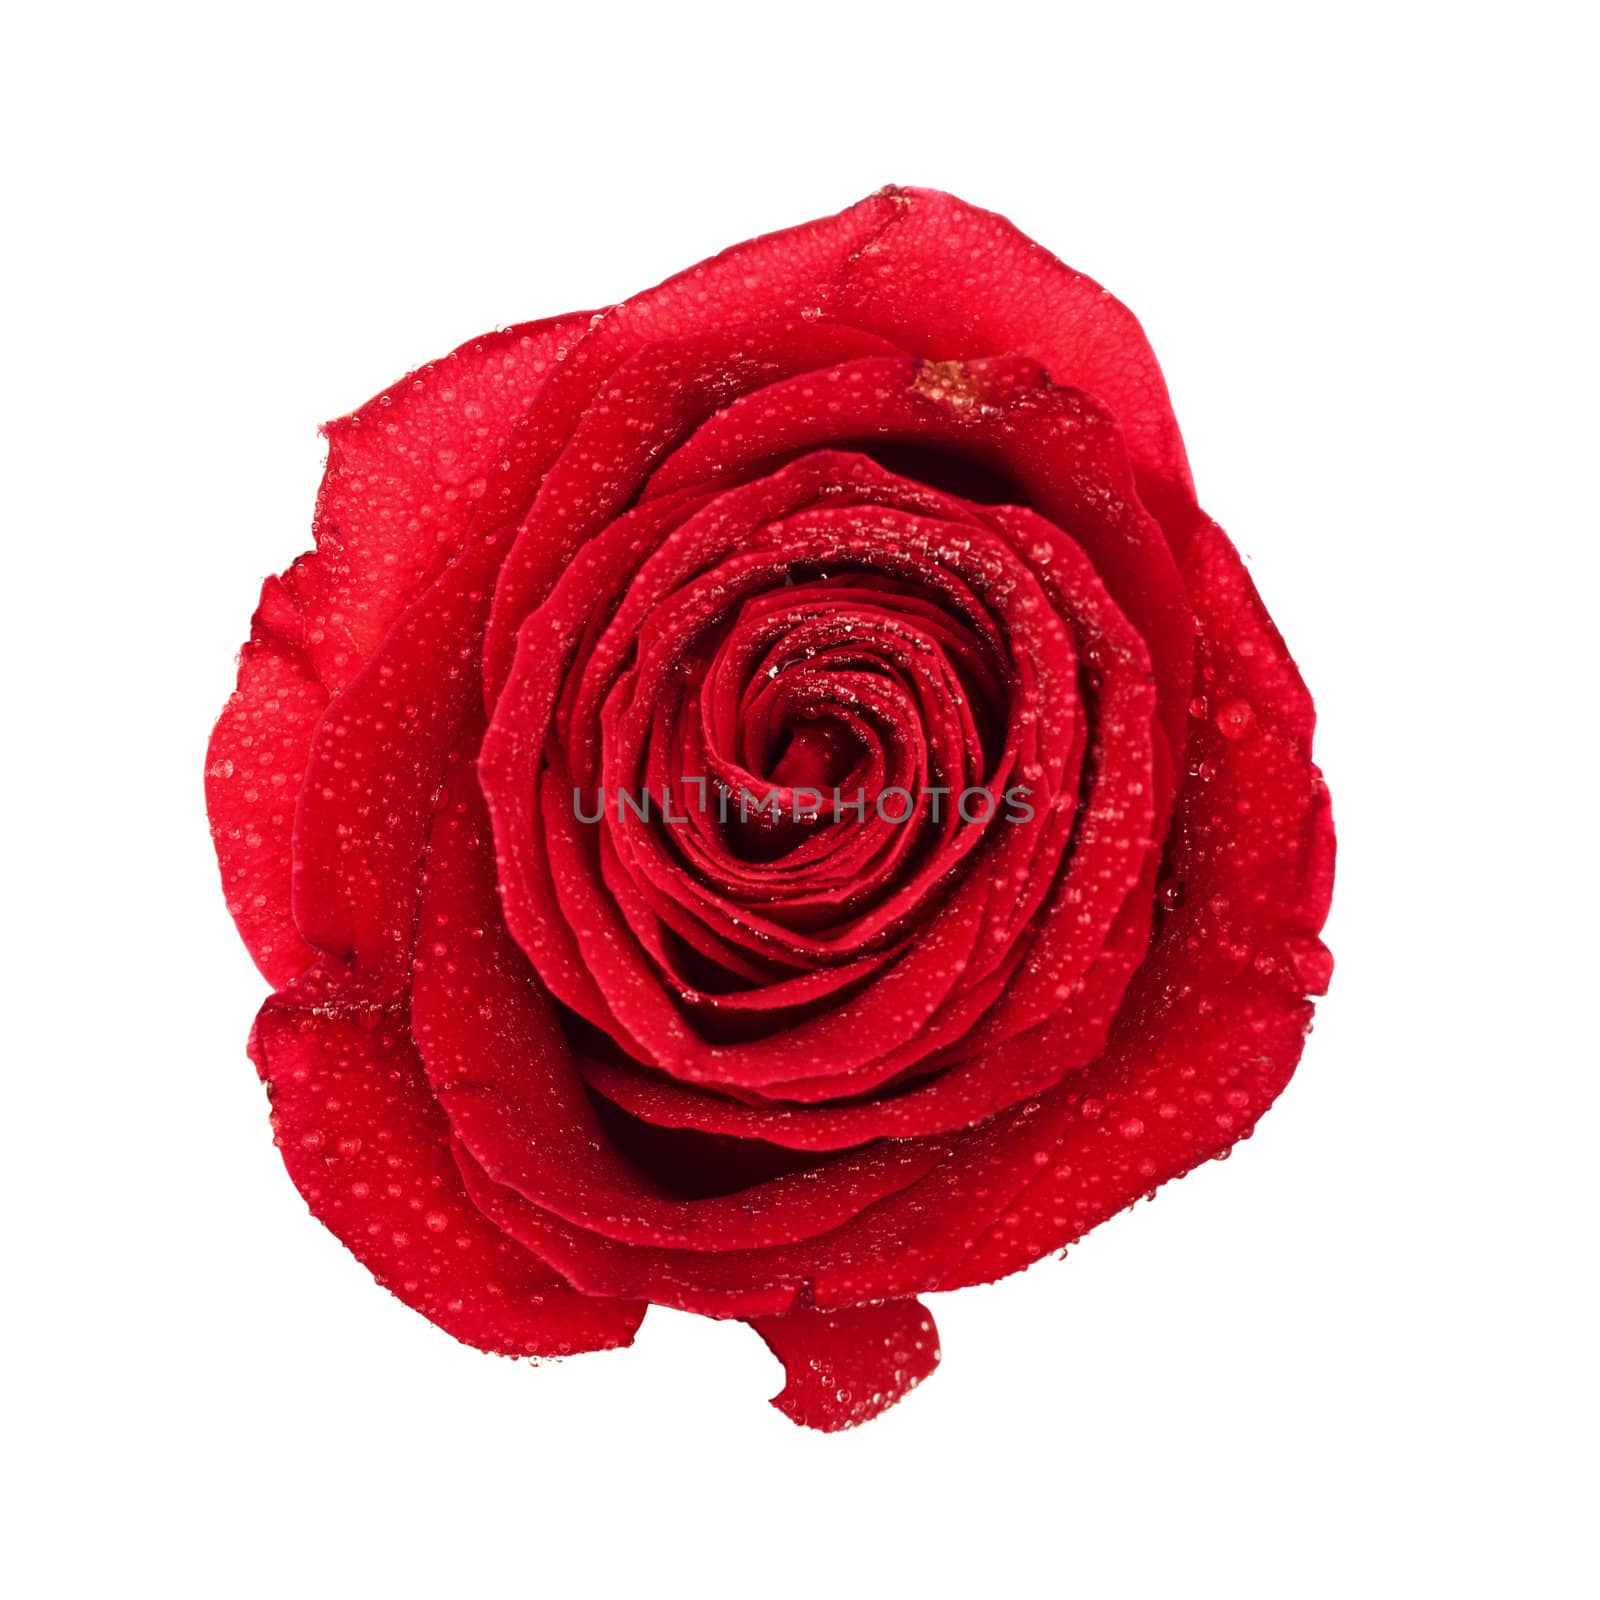 Red Rose Bud by petr_malyshev